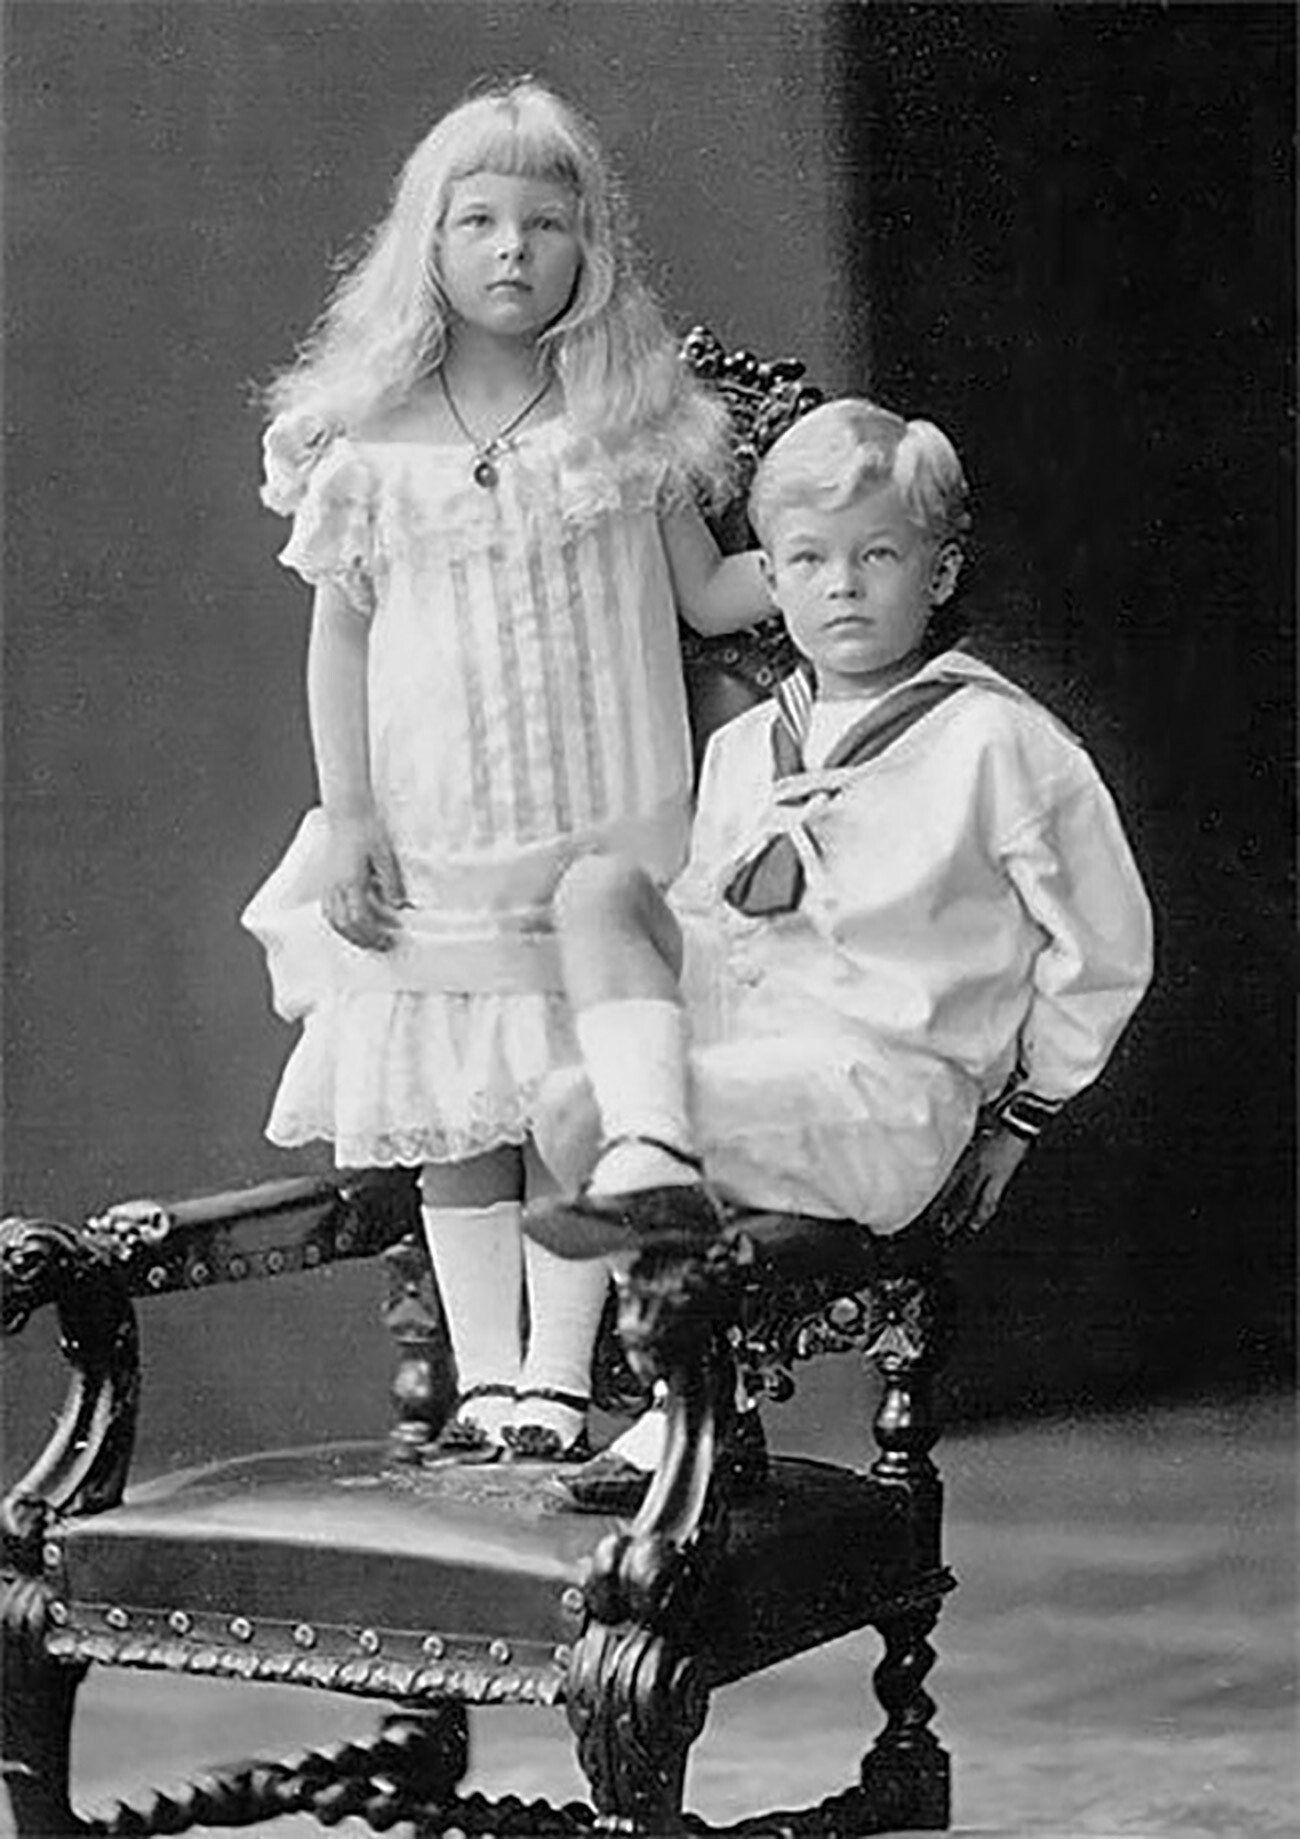 Georg-Michael Alexander von Merenberg con su hermana. Alrededor de 1900.